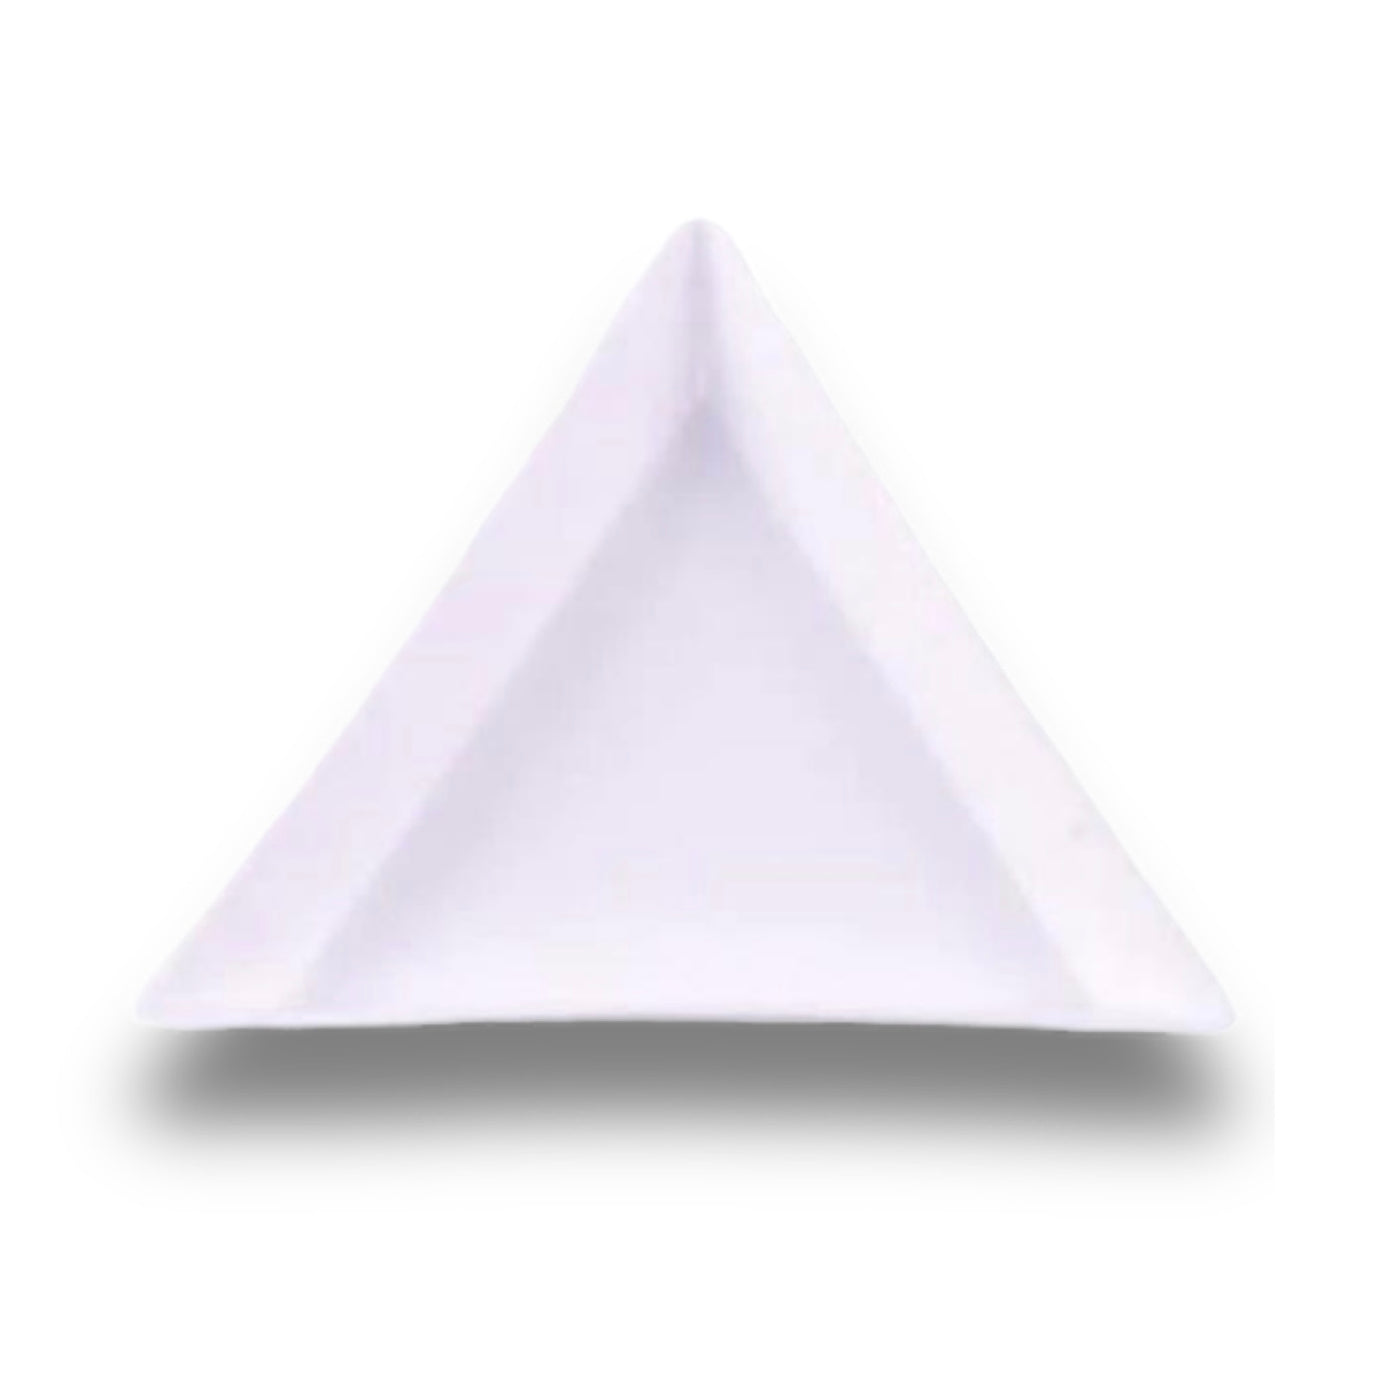 Triangle Gem Tray